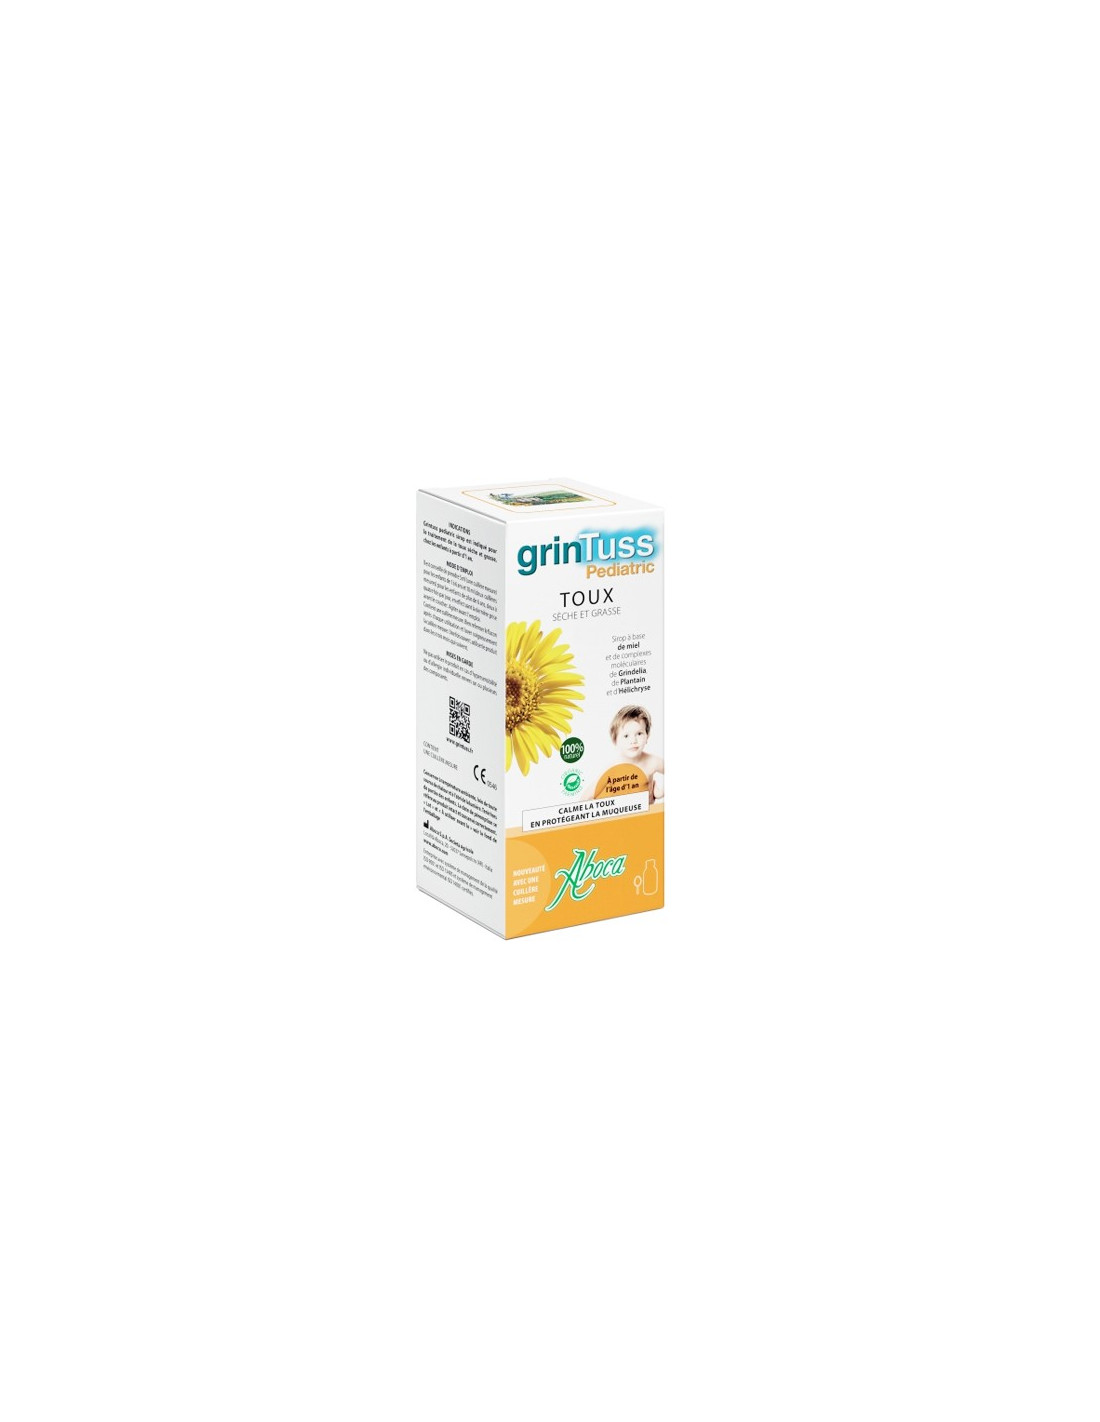 Aboca grintuss pediatric sirop flacon 128g